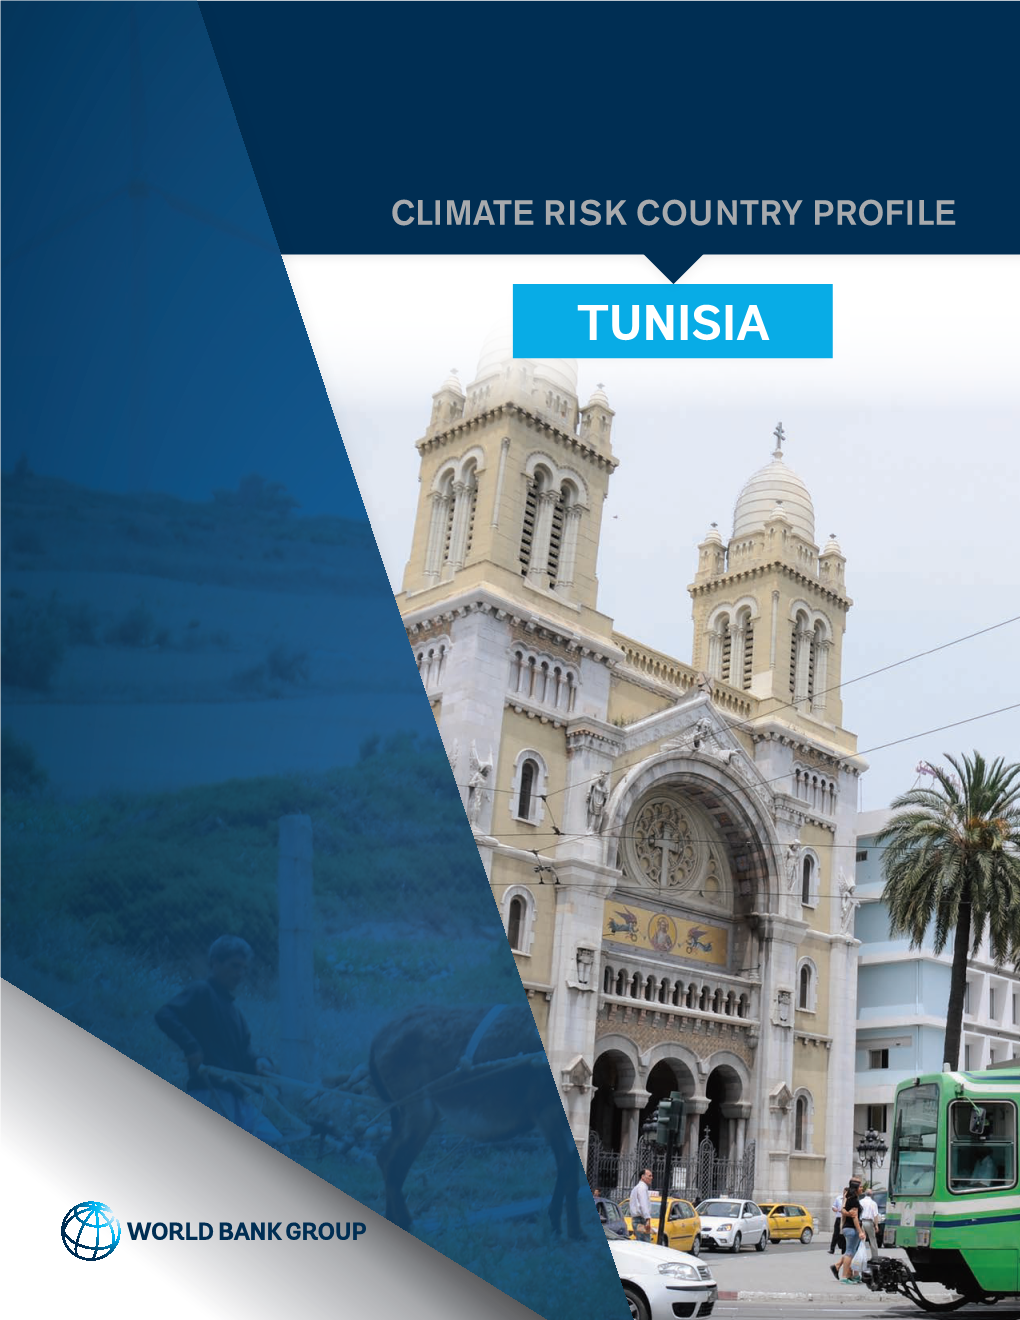 TUNISIA COPYRIGHT © 2021 by the World Bank Group 1818 H Street NW, Washington, DC 20433 Telephone: 202-473-1000; Internet